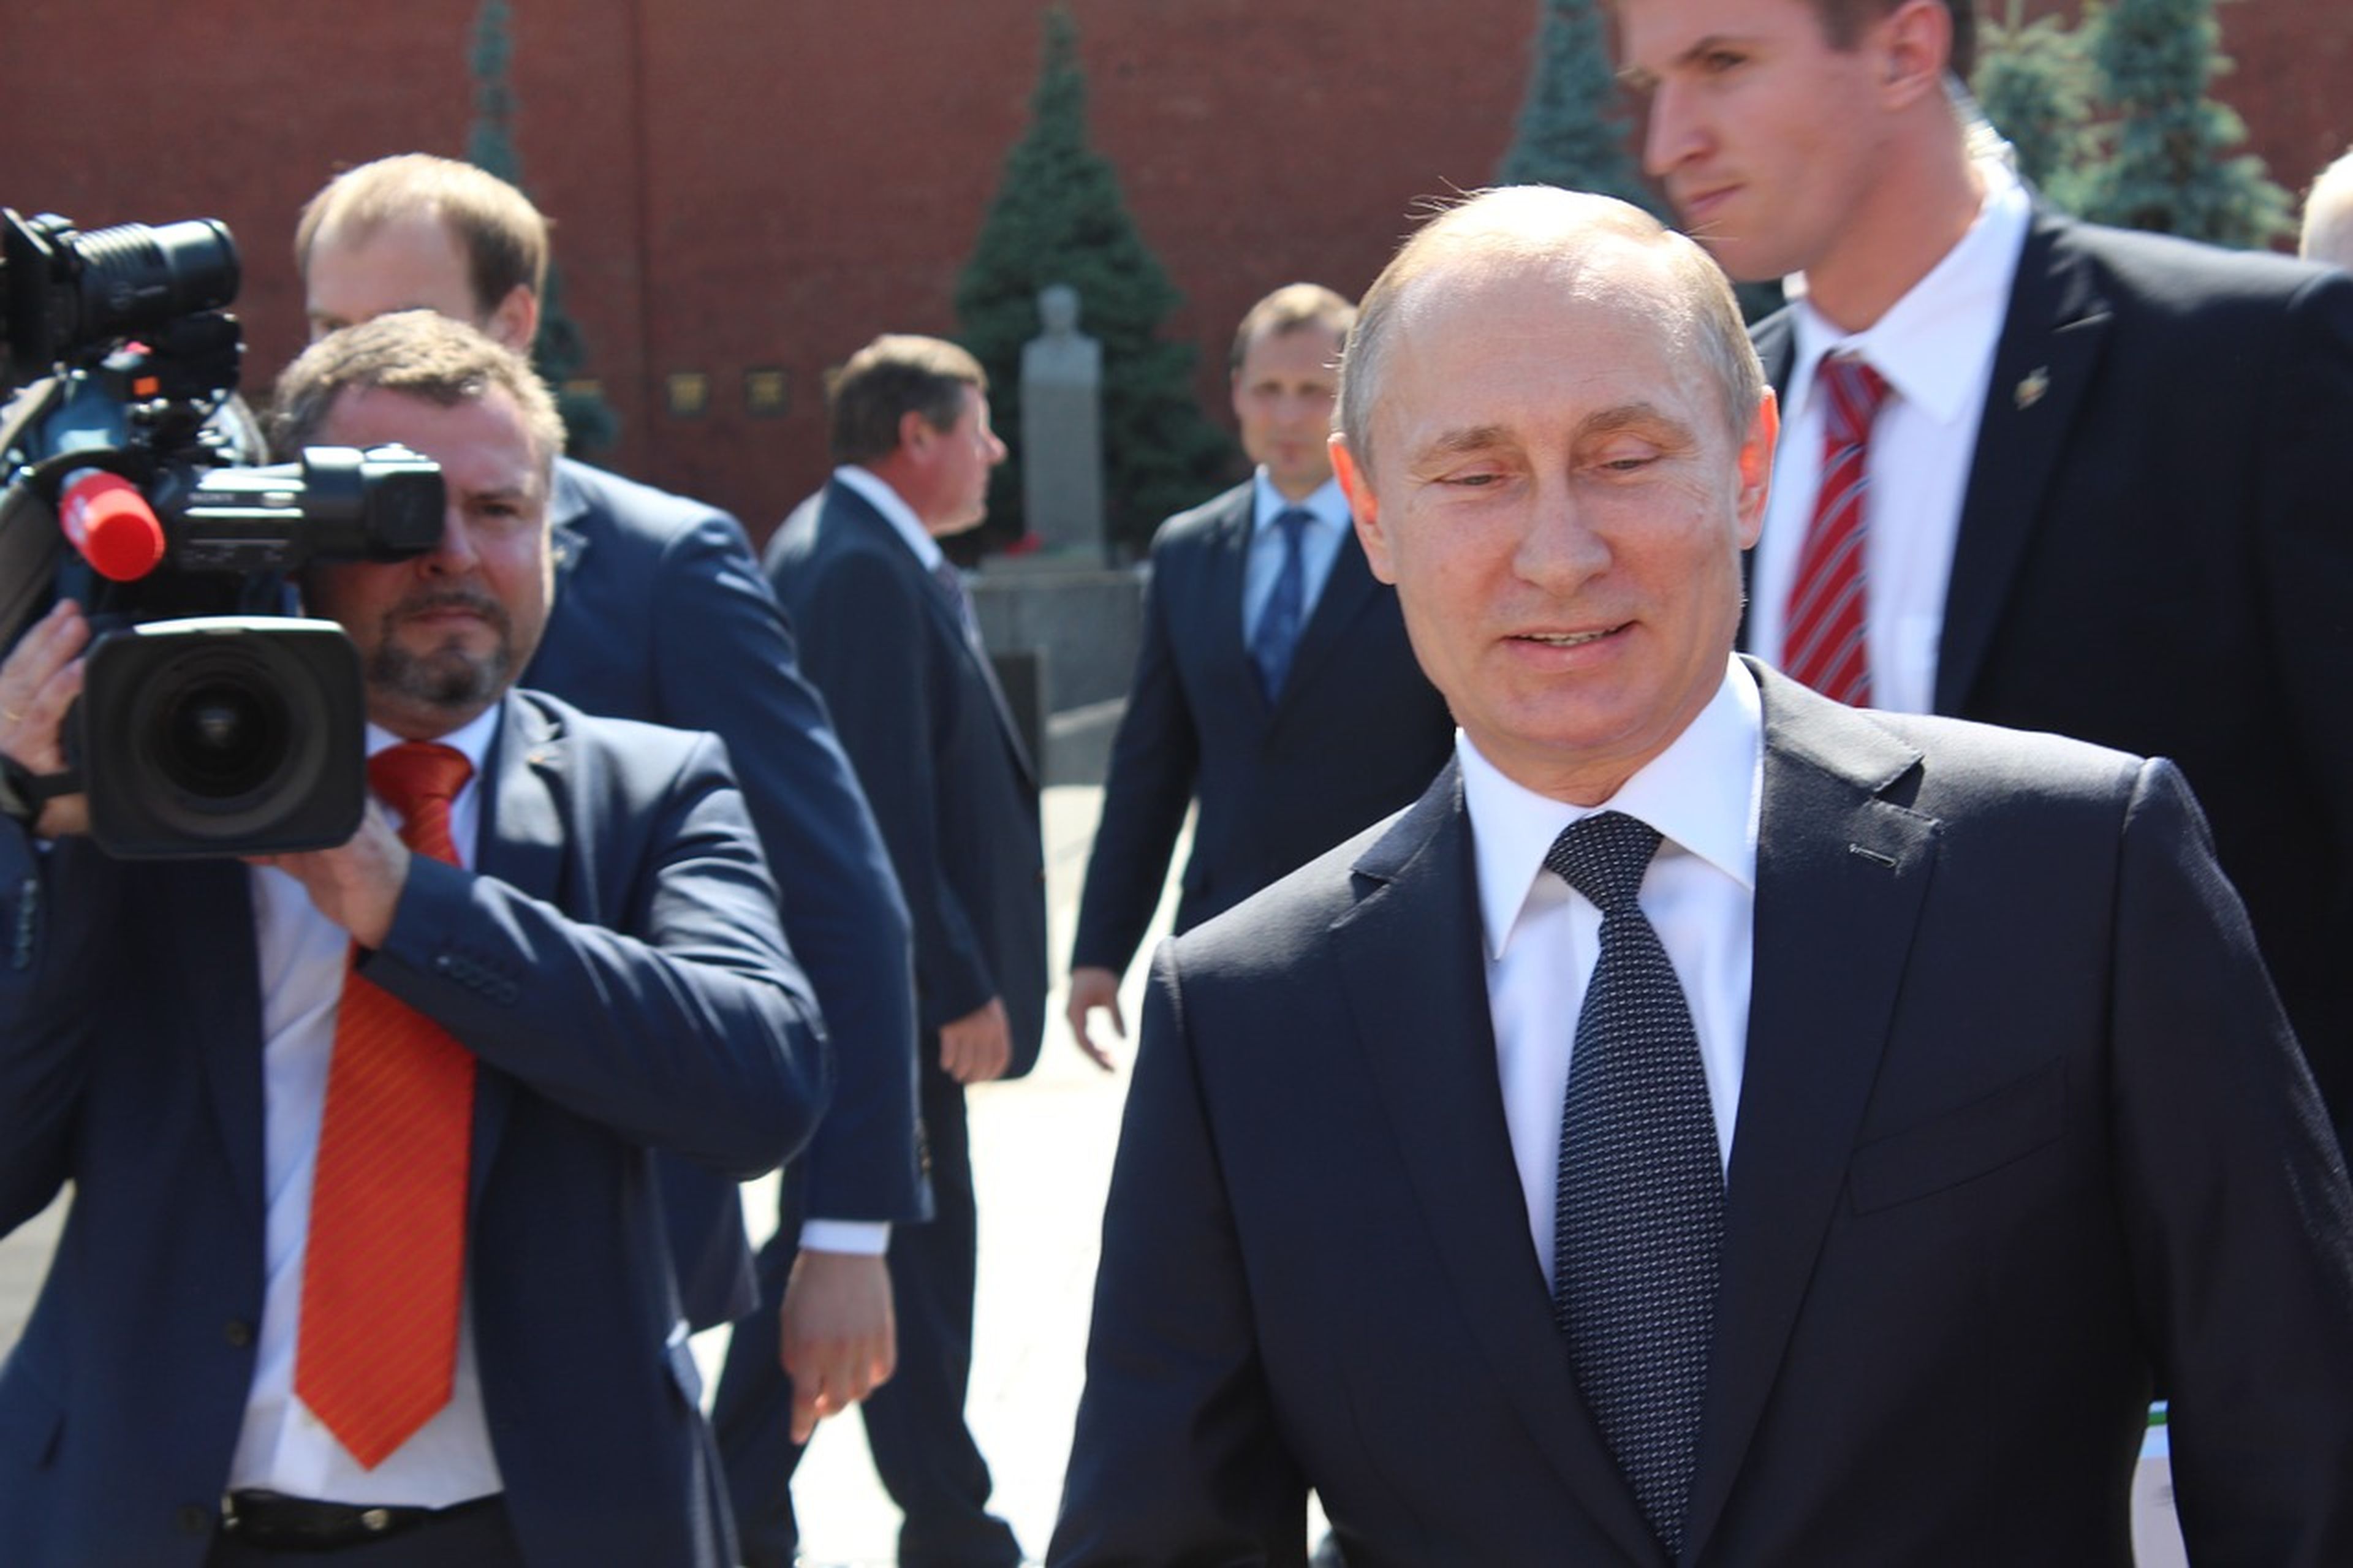 Periodista mirada asesina a Putin